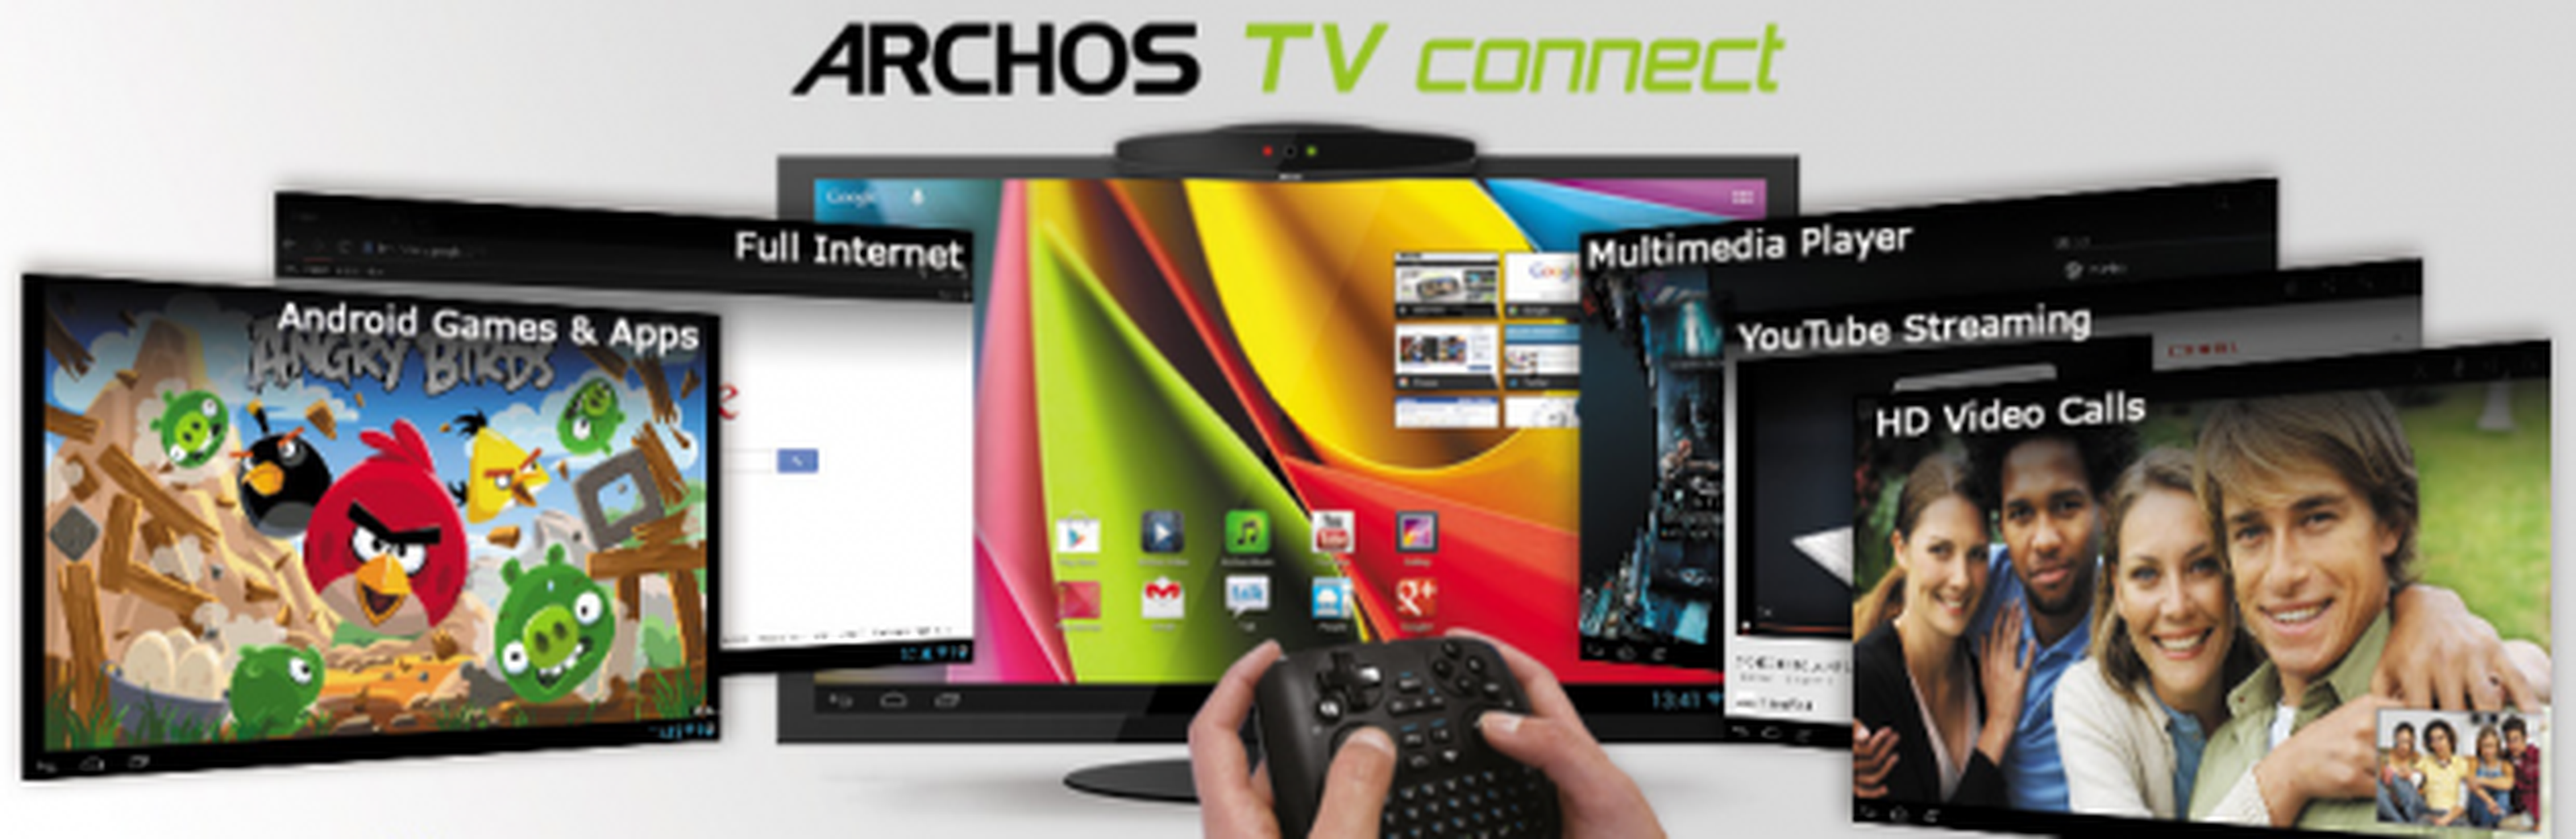 archos tv connect